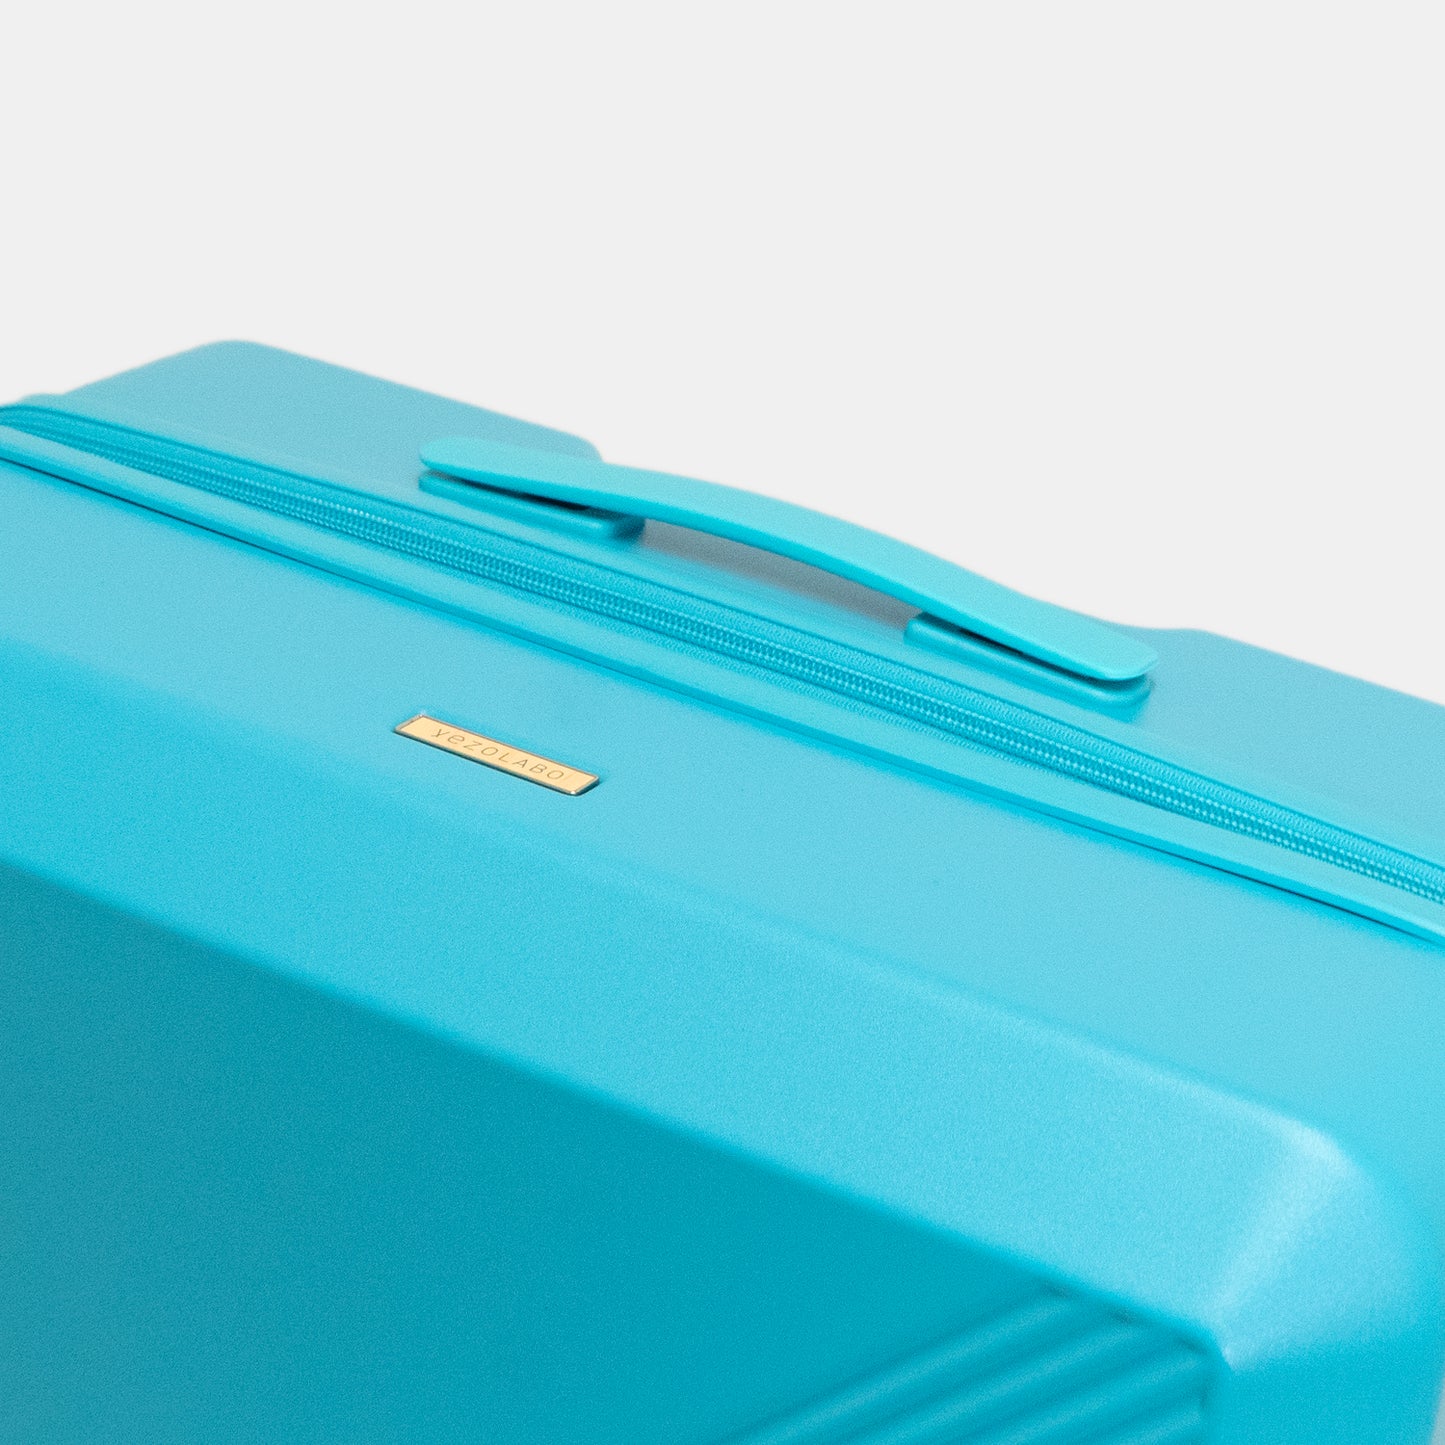 Brush北海道カラーパレットスーツケース（キャリーケース）のトップハンドルは、ハンドルが二箇所に設置されています。階段での持ち運びや荷物の預け入れ時に、メインハンドルは家の中に運び入れたり電車の網棚に乗せる時に有用です。手になじみ握りやすく、使用しない時はフラットになる省スペース設計のピックアップ式ハンドルです。